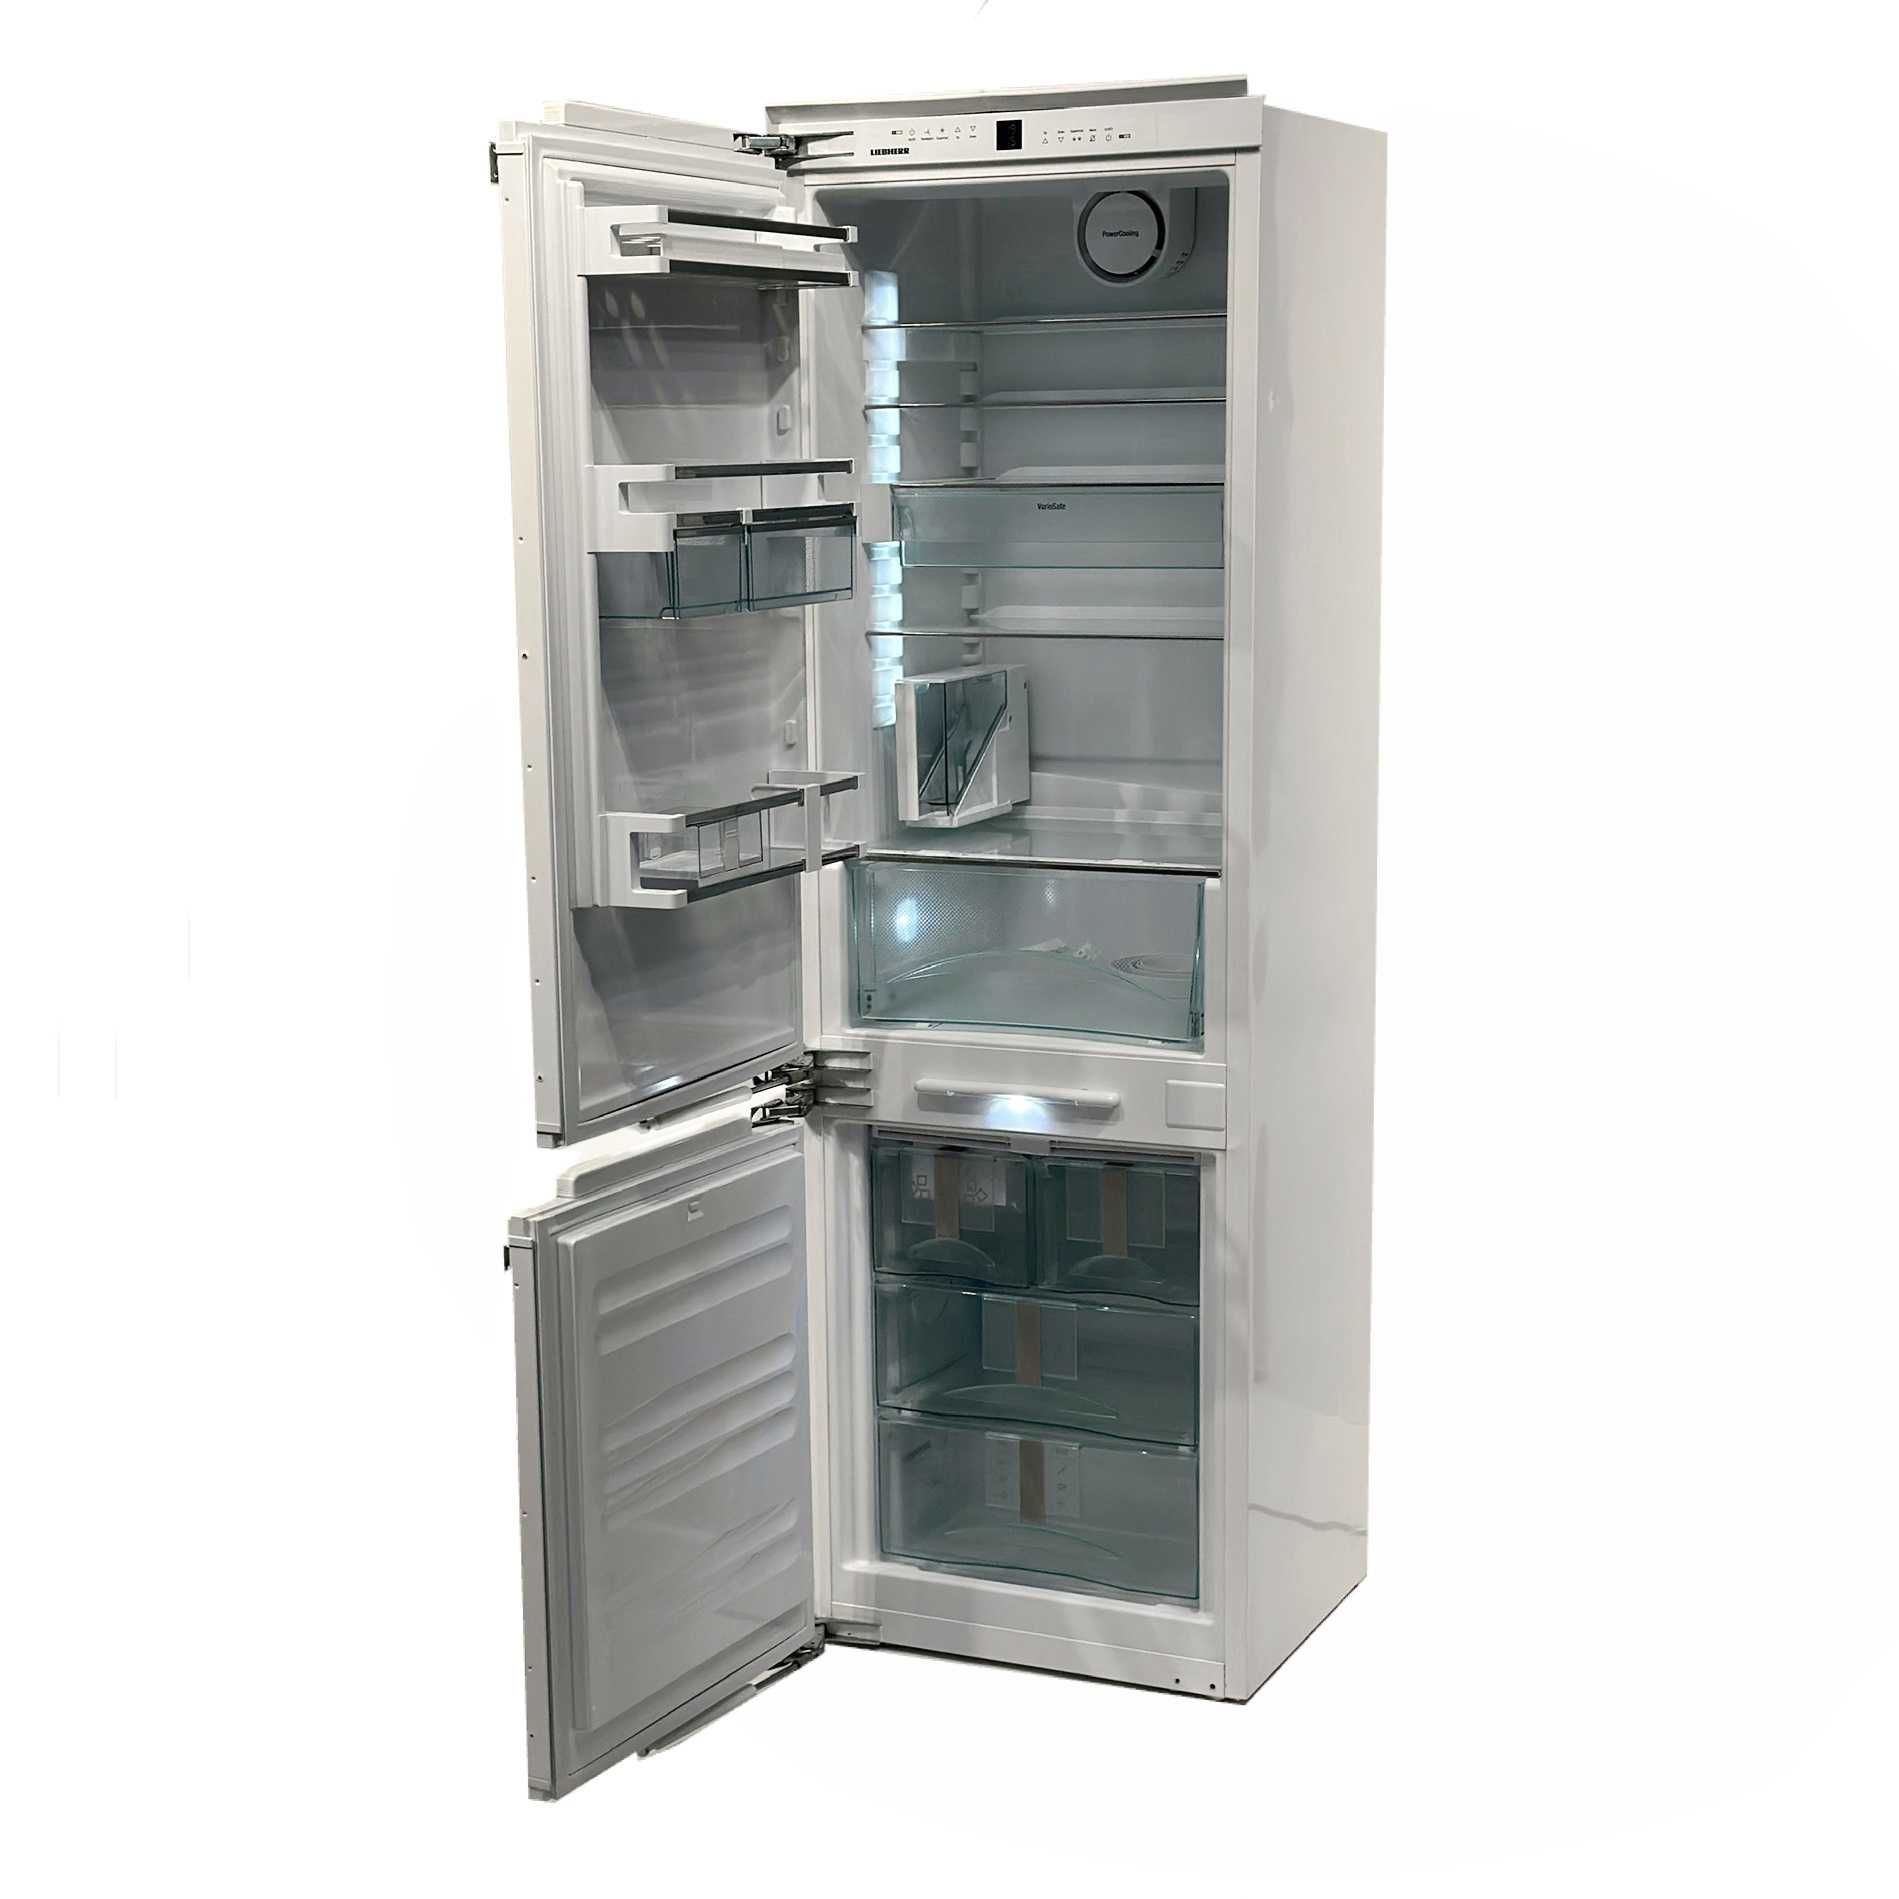 Вбудований холодильник Liebherr ICN 3386